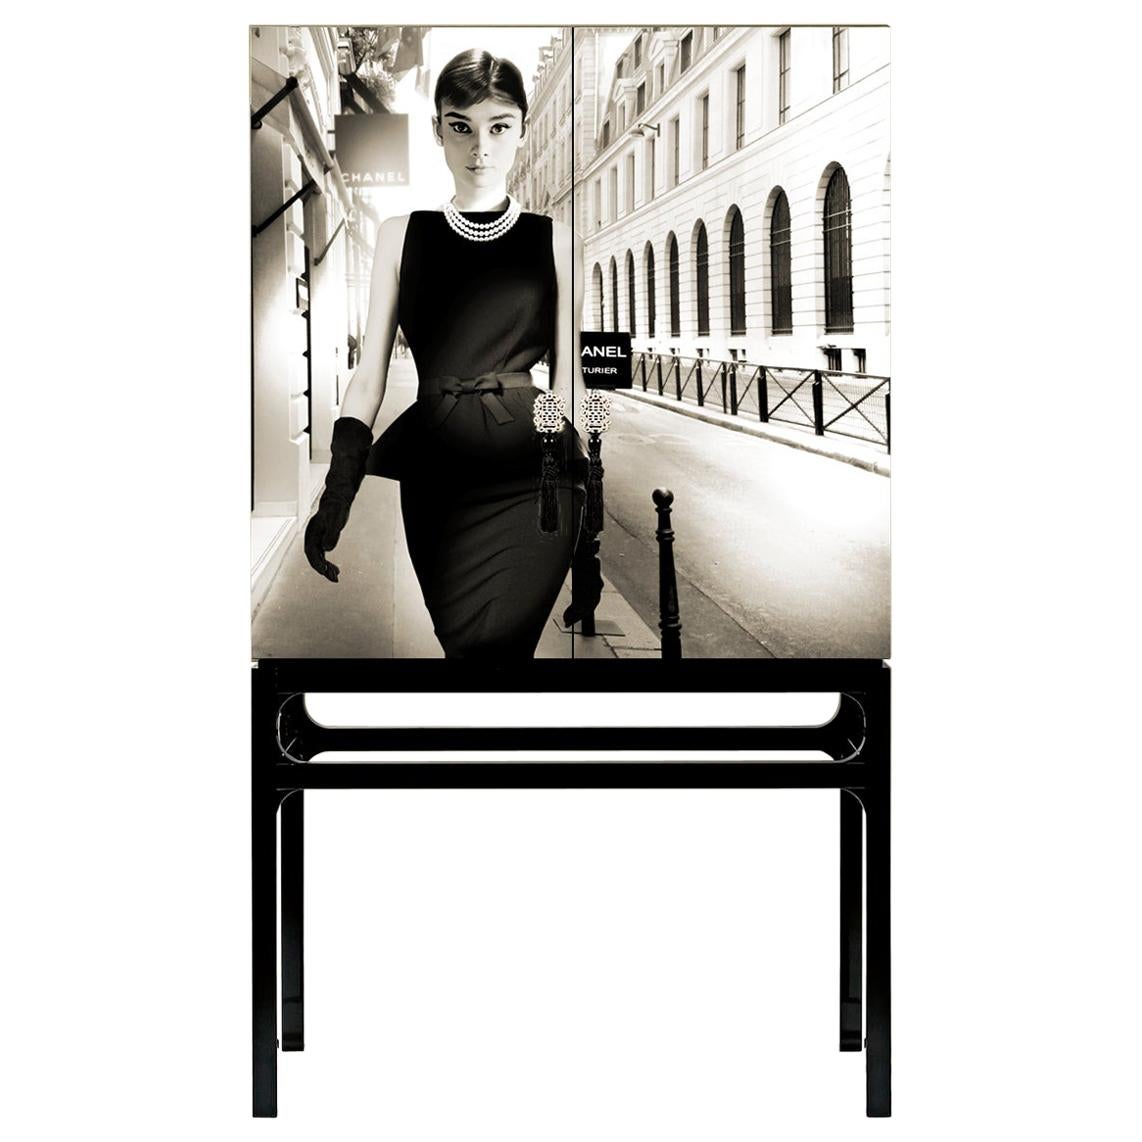 Little Black Dress Audrey Hepburn Cabinet with Art. Intervention by Axel Crieger